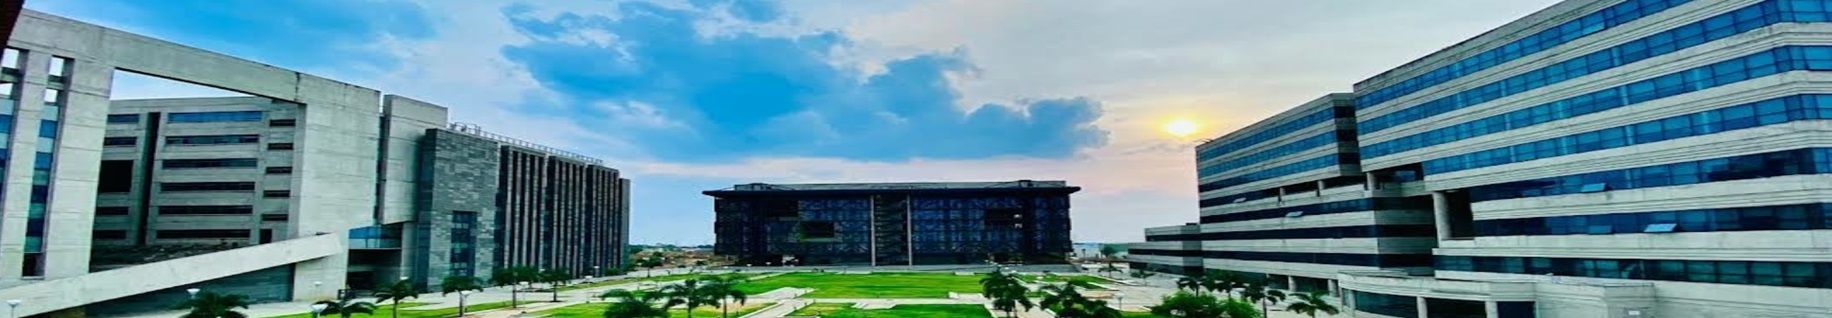 IIT Hyderabad Campus View